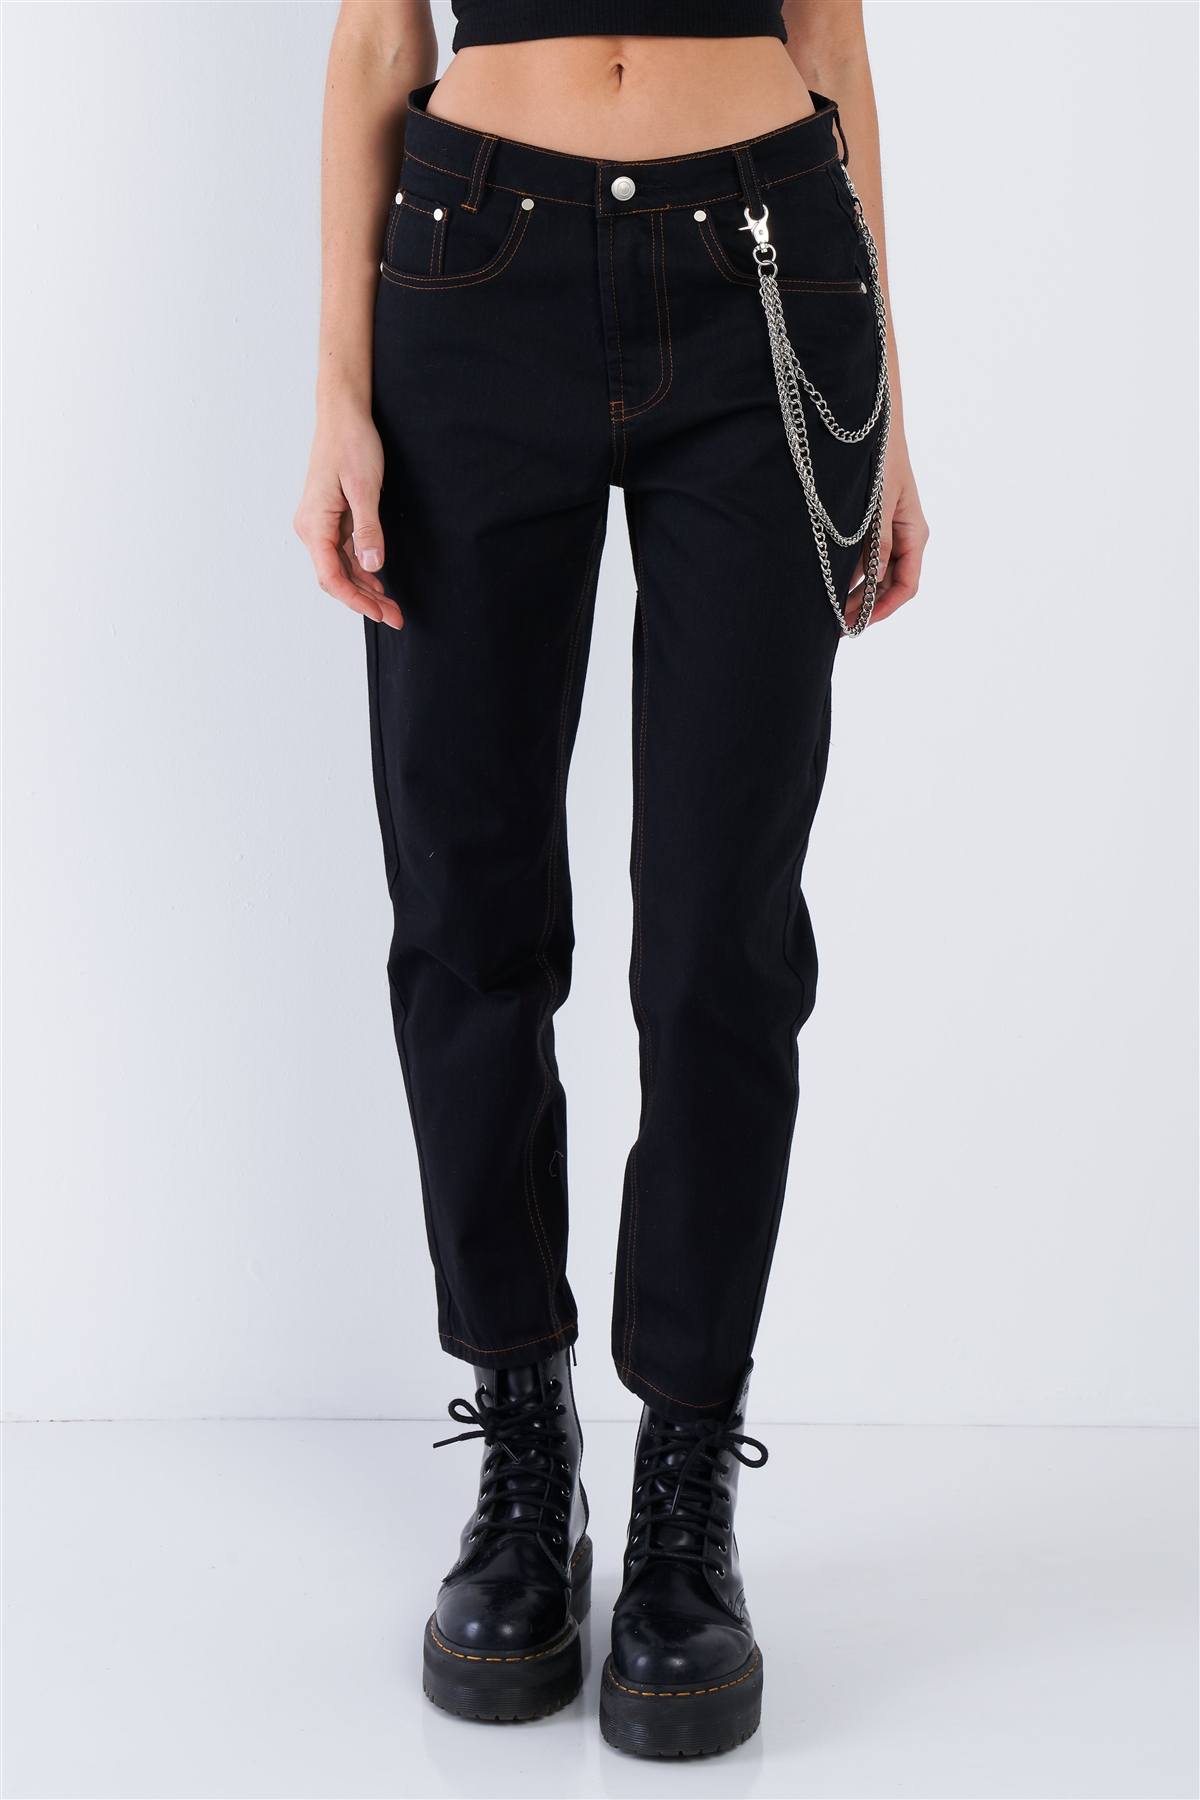 Black Casual Denim Boot Cut Jeans